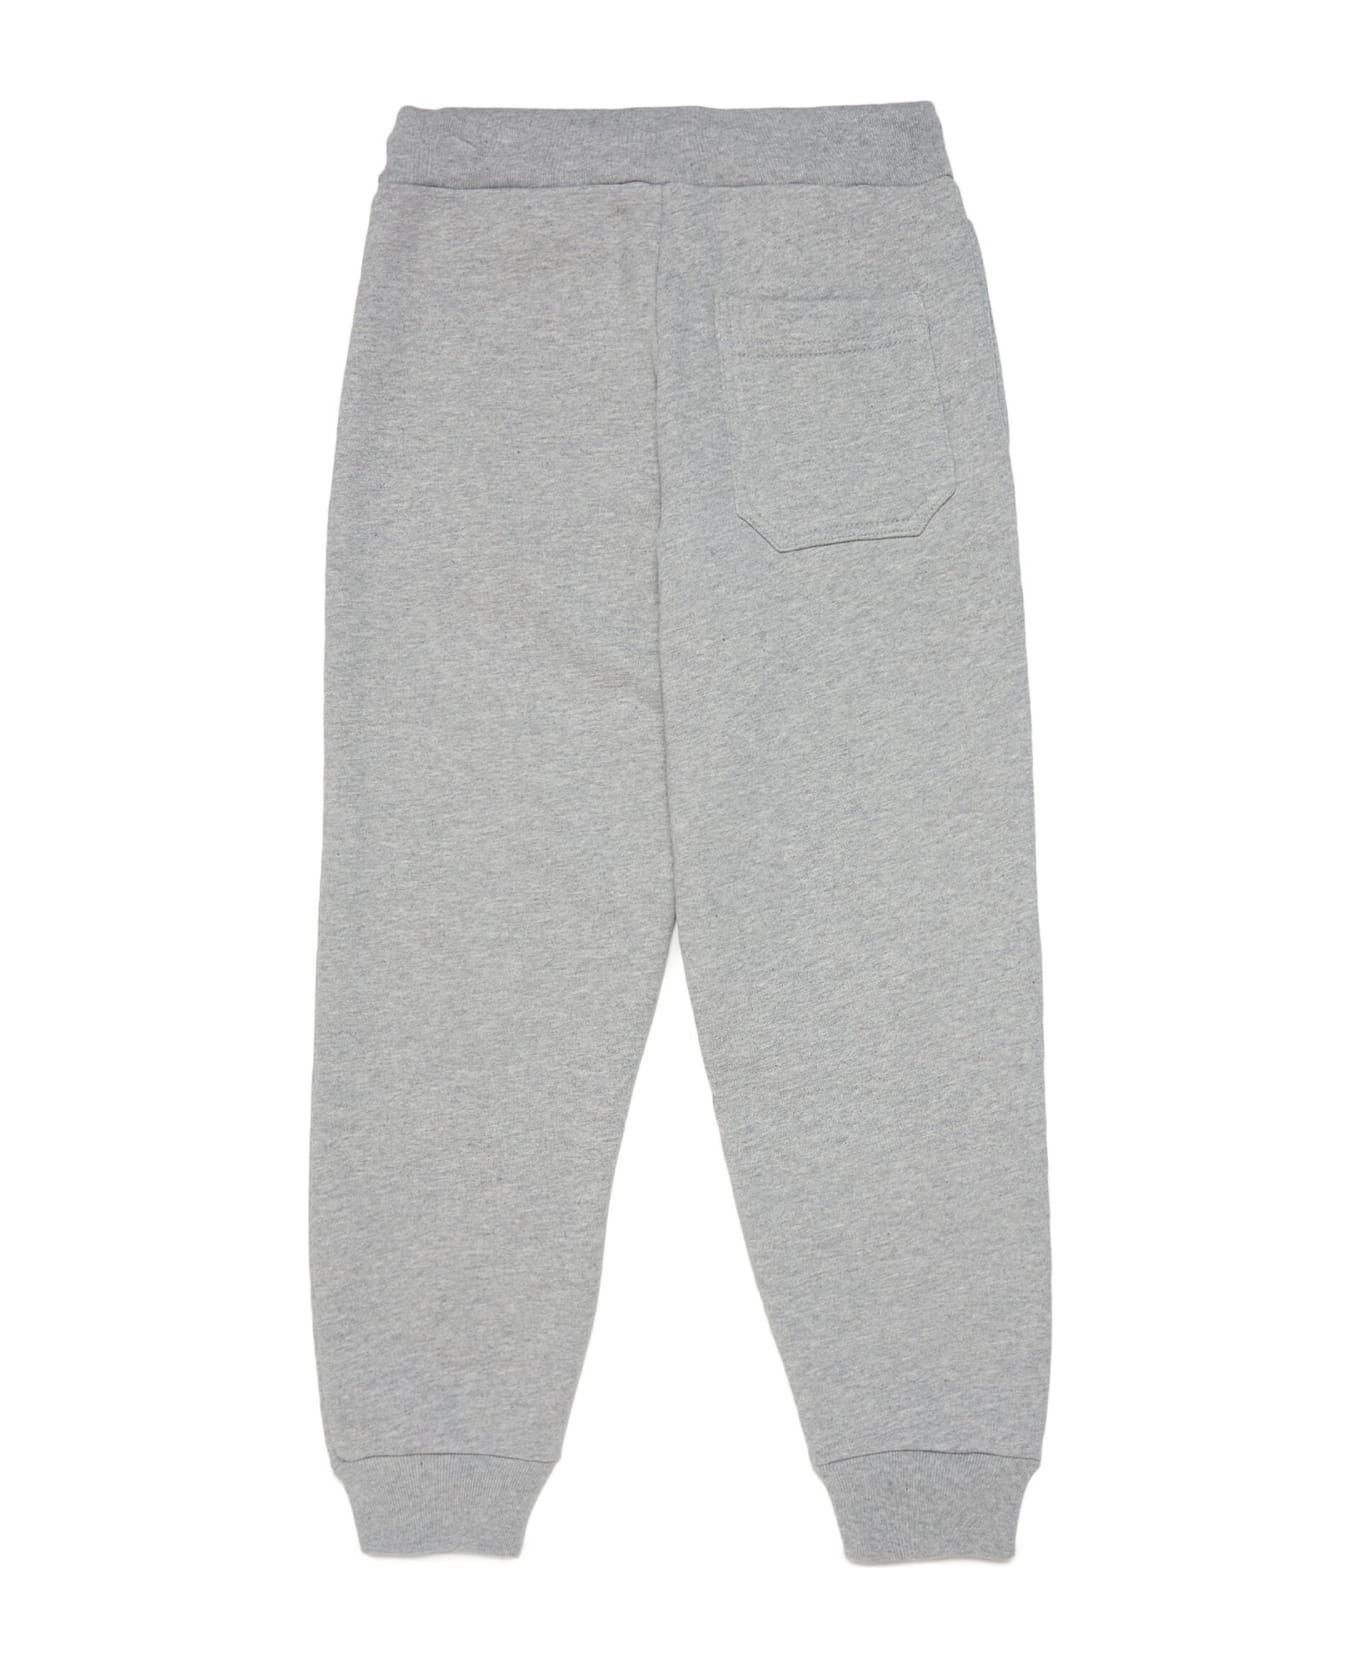 Marni Mp37u Trousers Marni Grey Fleece Trousers With Displaced Marni Logo - Inox gray melange